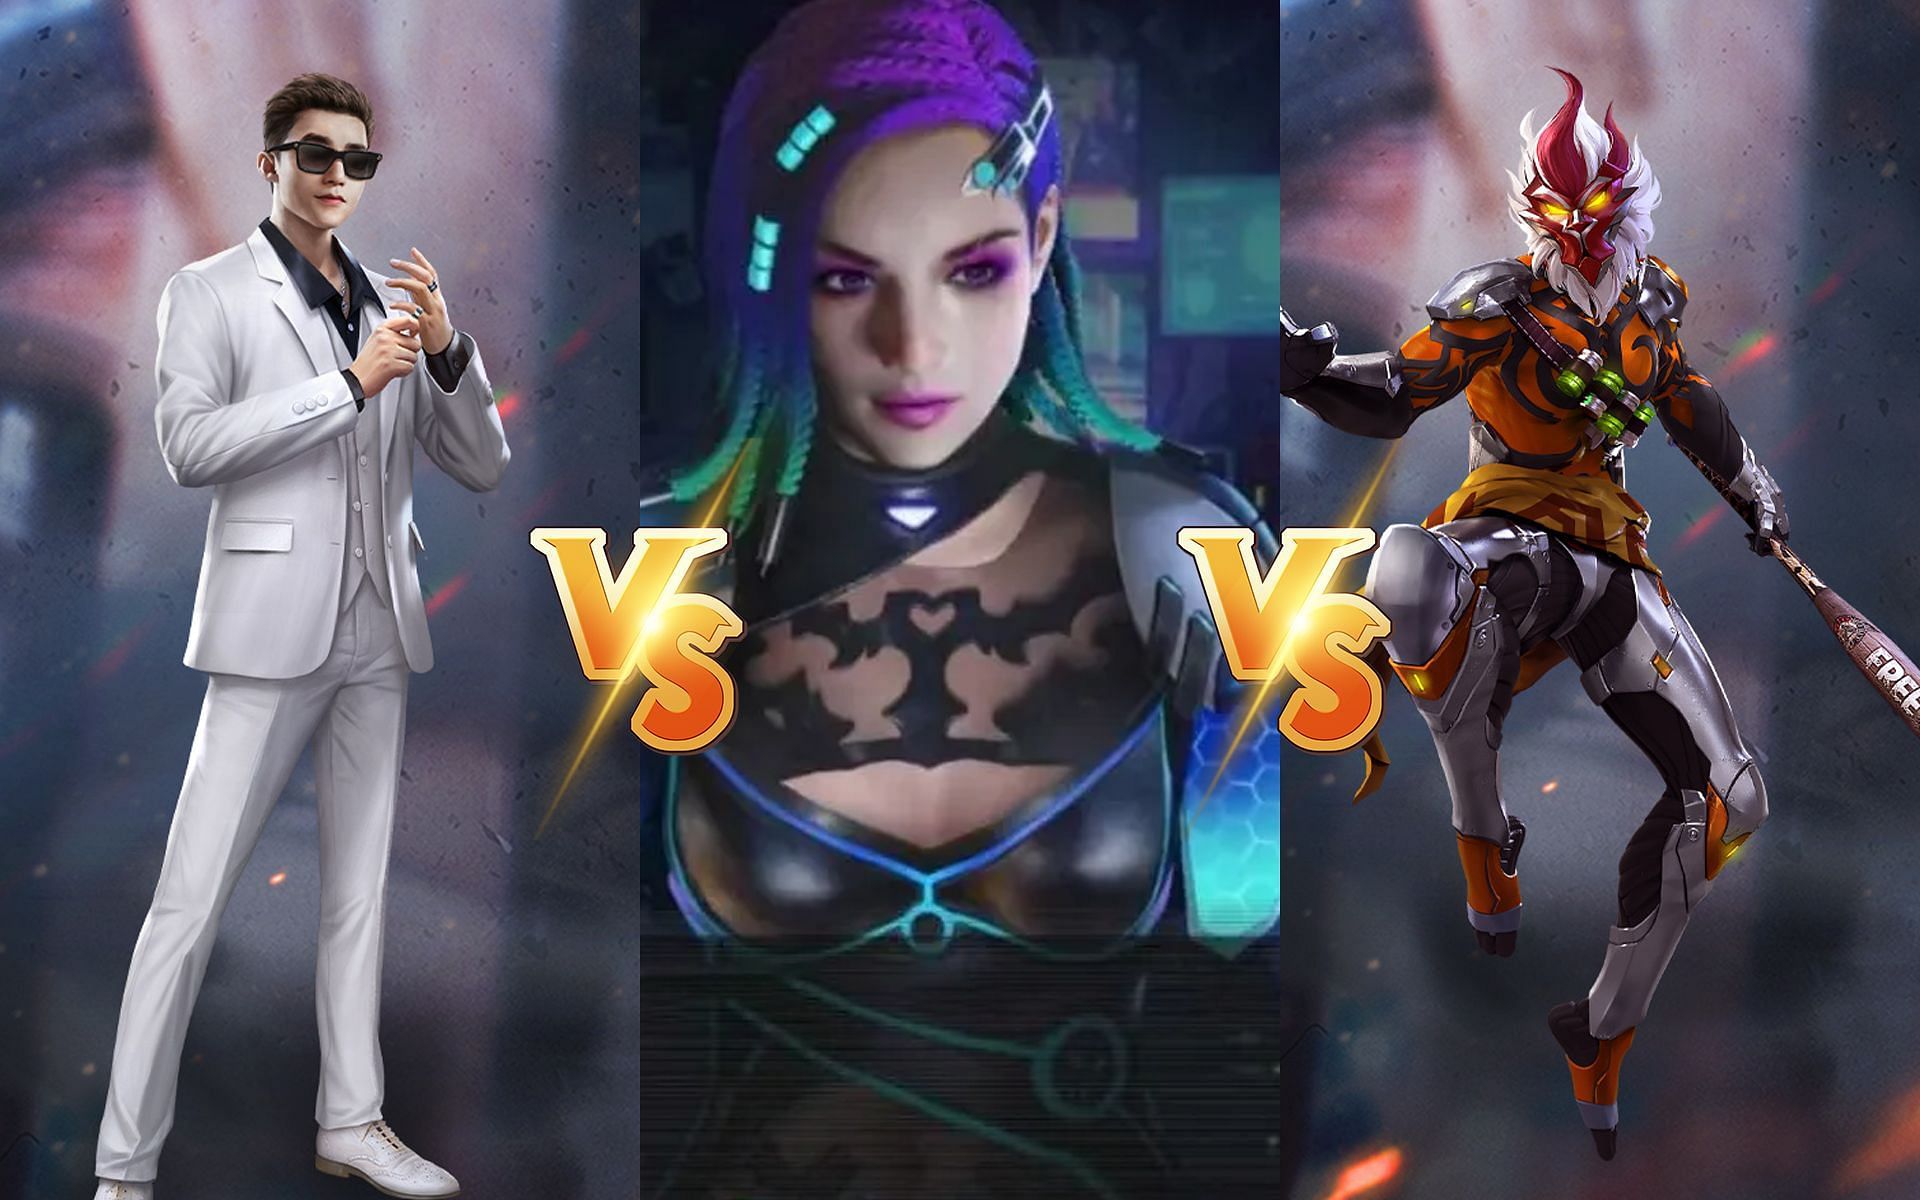 Skyler vs Elite Moco vs Wukong: Who is the most suitable for rank push? (Image via Sportskeeda)